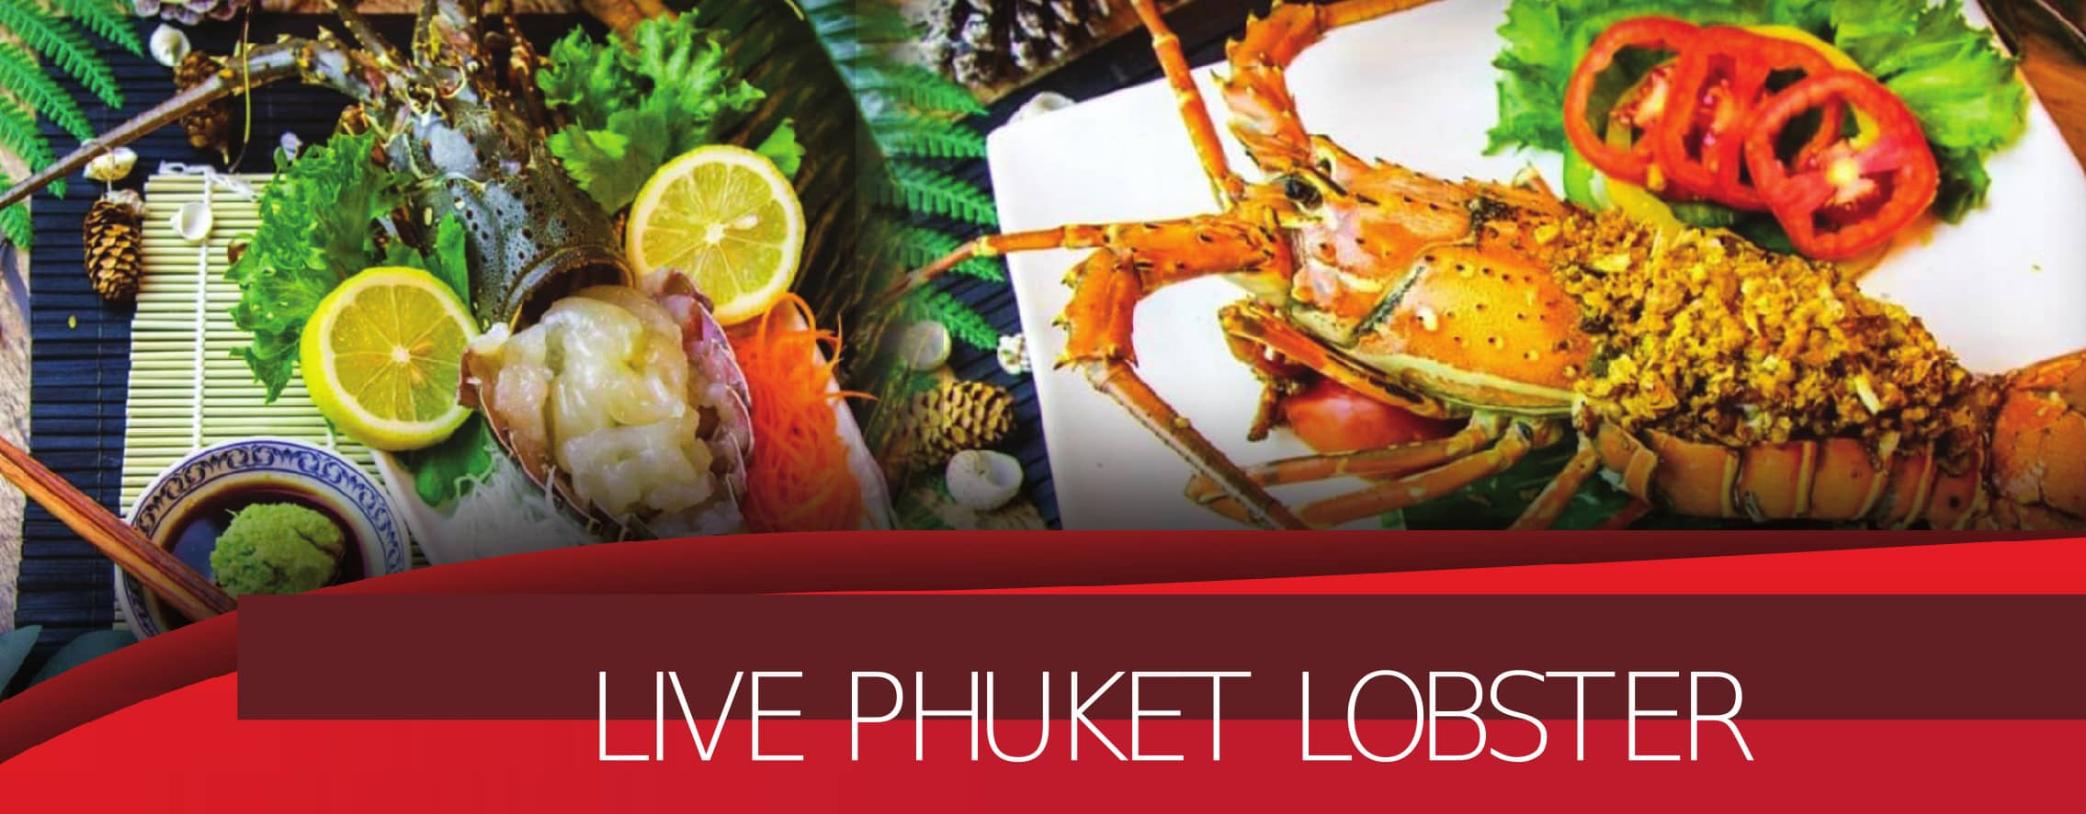 Live Phuket Lobster